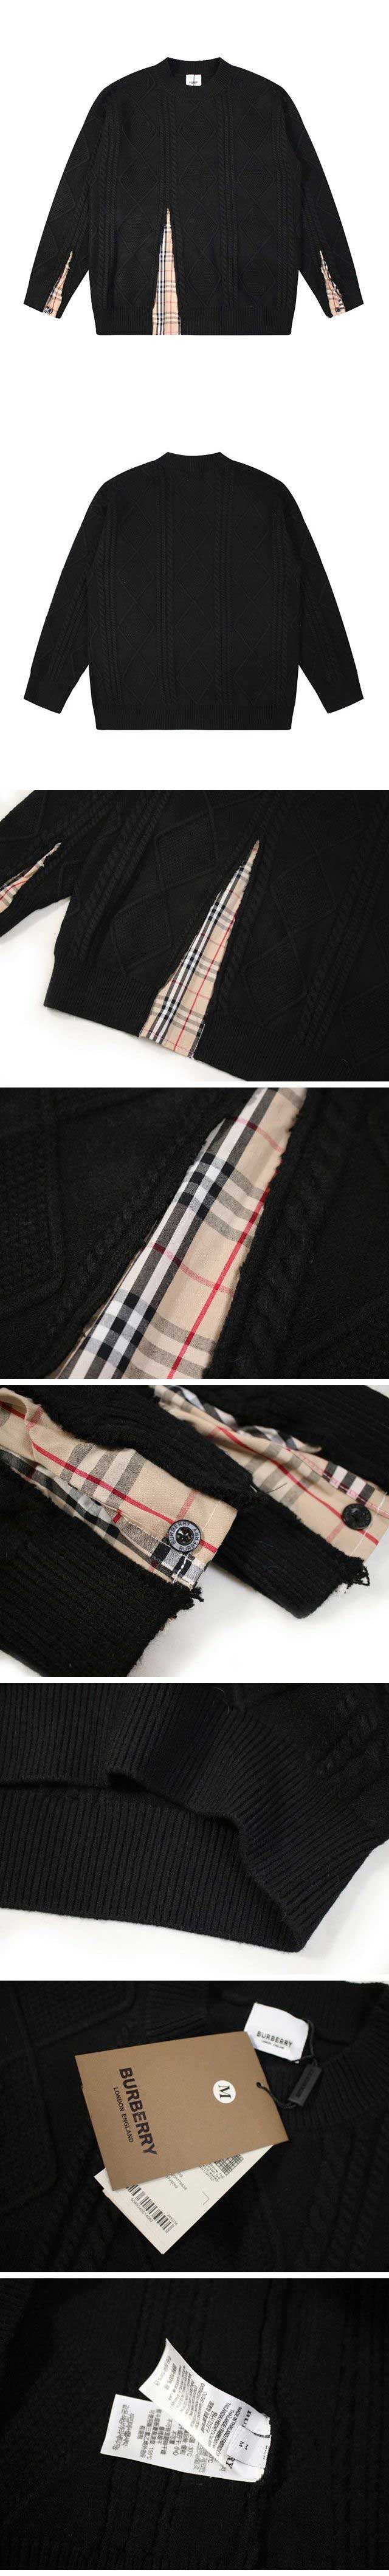 Burberry Damage Check Knit Sweater バーバリー ダメージ チェック ニット セーター